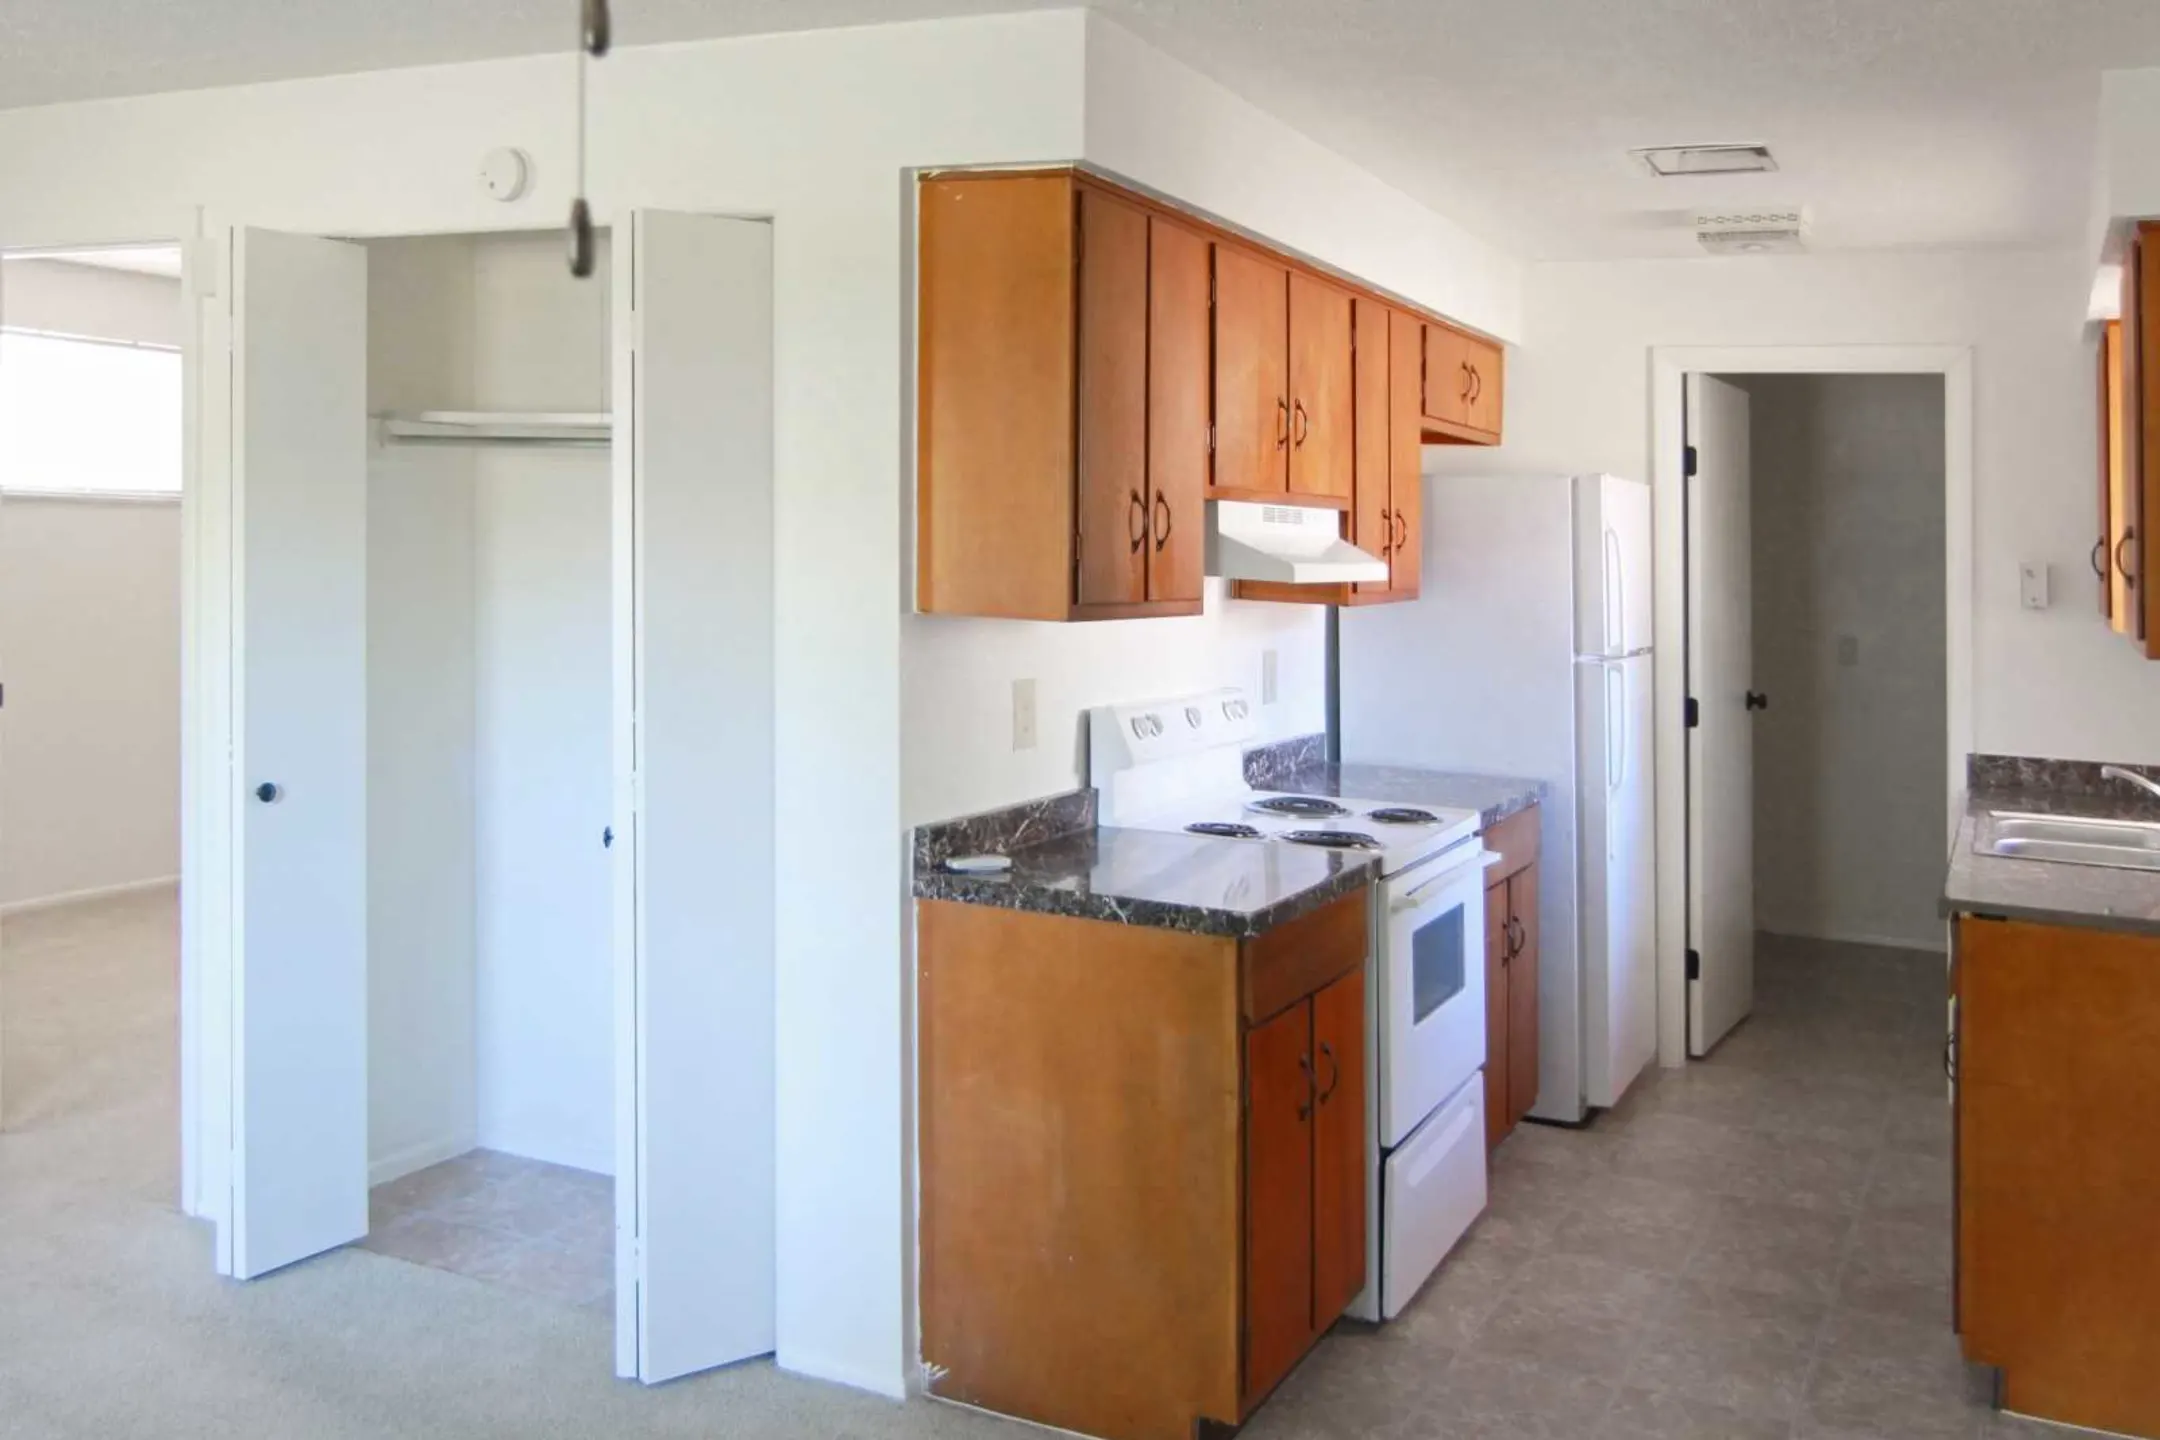 Kitchen - Broadmoor Apartments - Dayton, OH